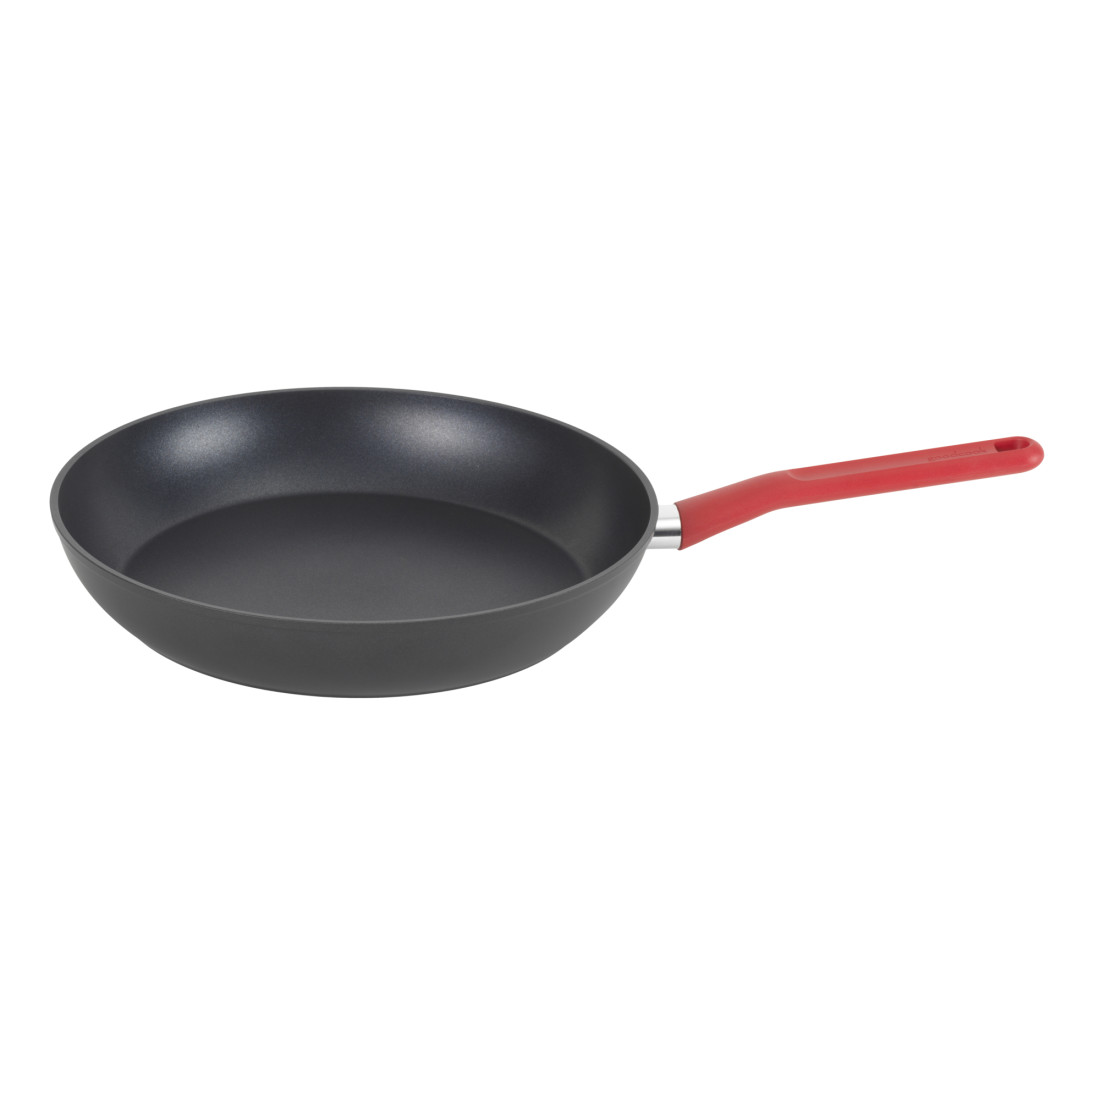 GoodCook ProEase Nonstick Fry Pan, 12 Inch, Black - GoodCook